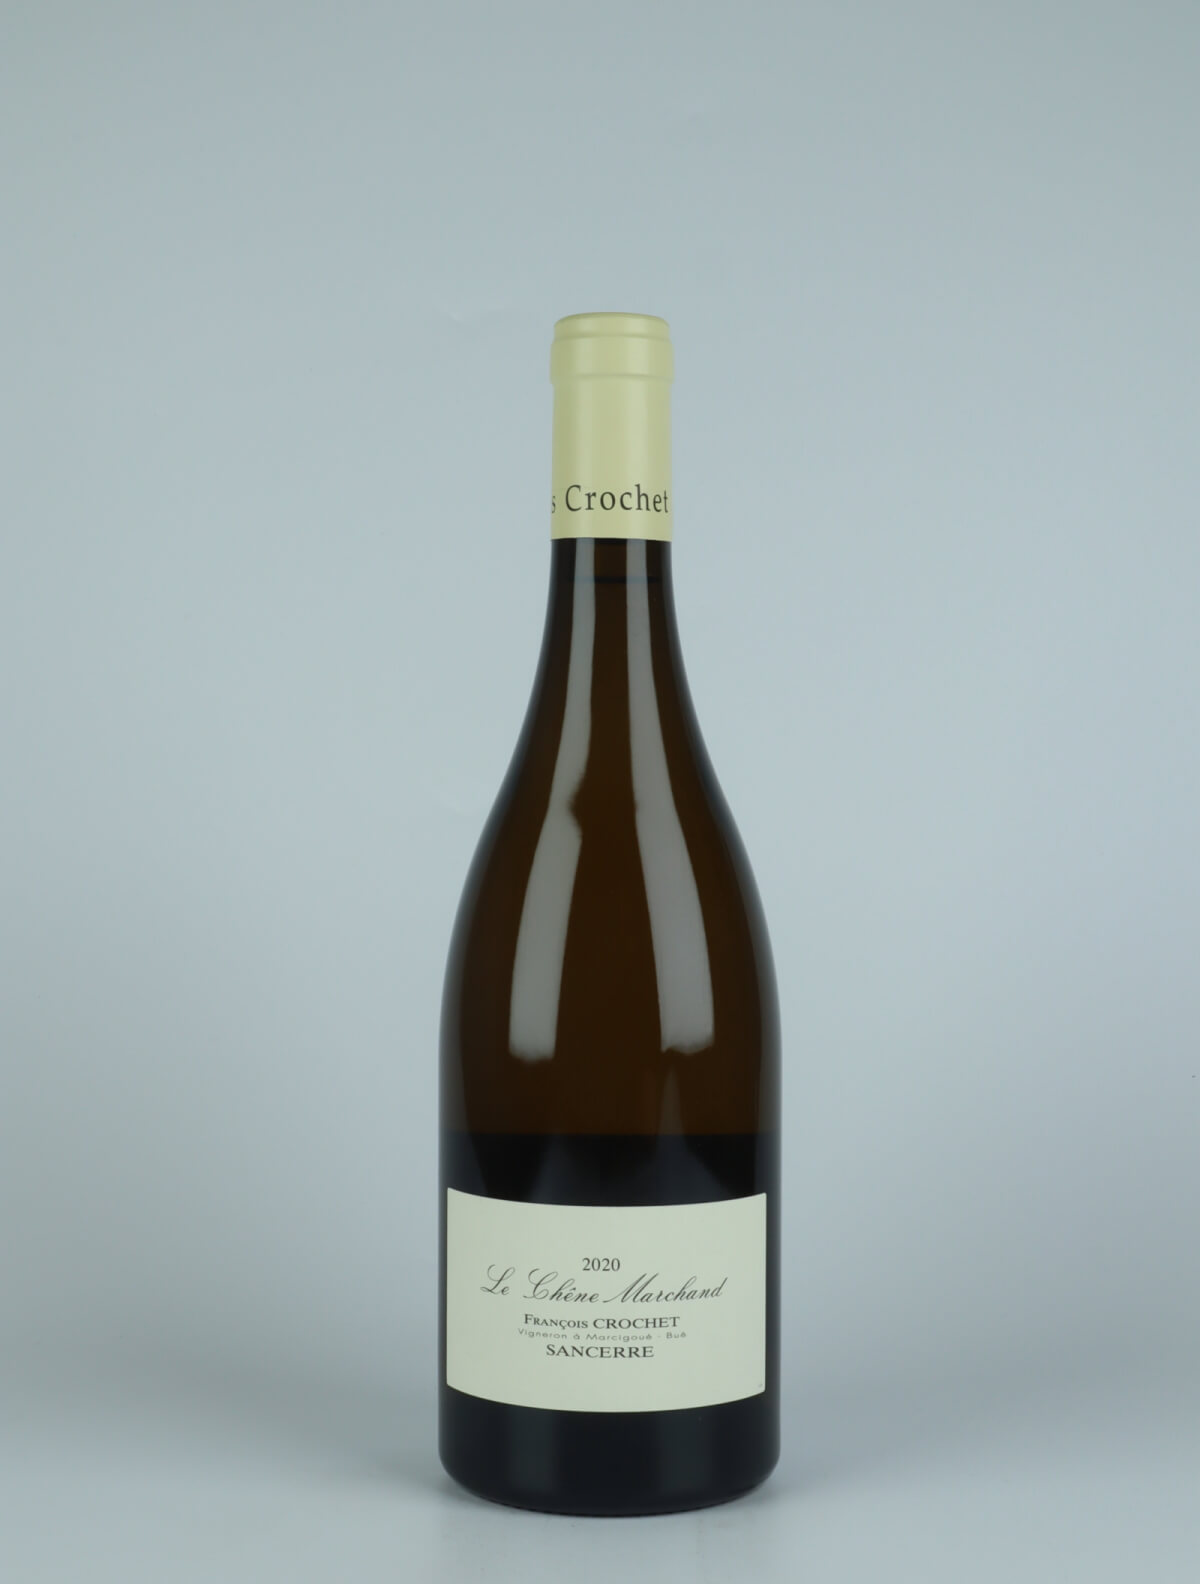 A bottle 2020 Sancerre - Le Chêne Marchand White wine from François Crochet, Loire in France